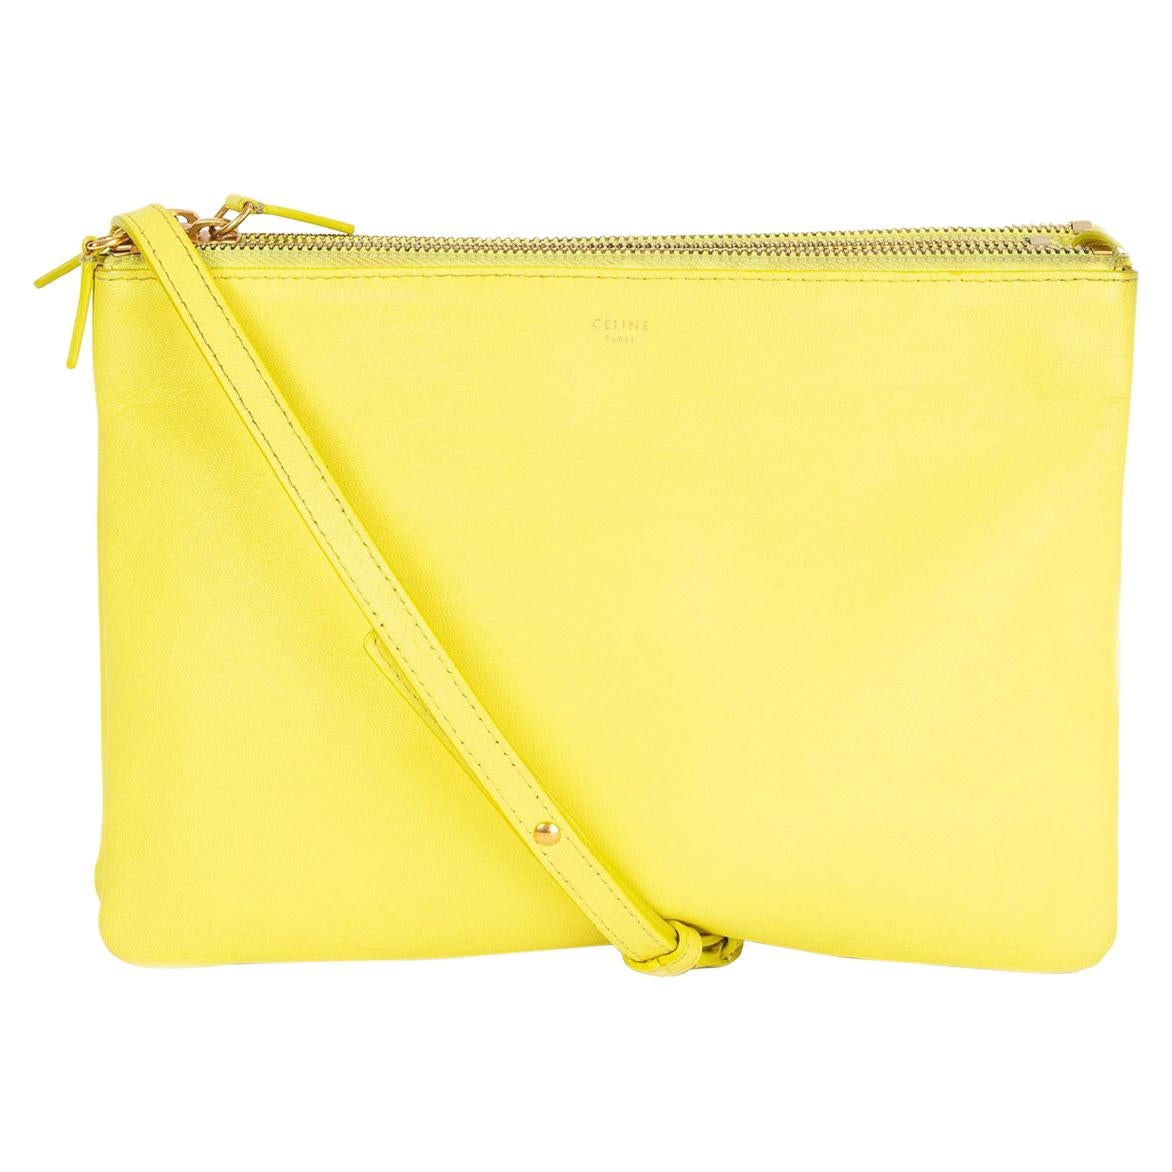 CELINE Fluo yellow leather TRIO LARGE Crossbody Shoulder Bag